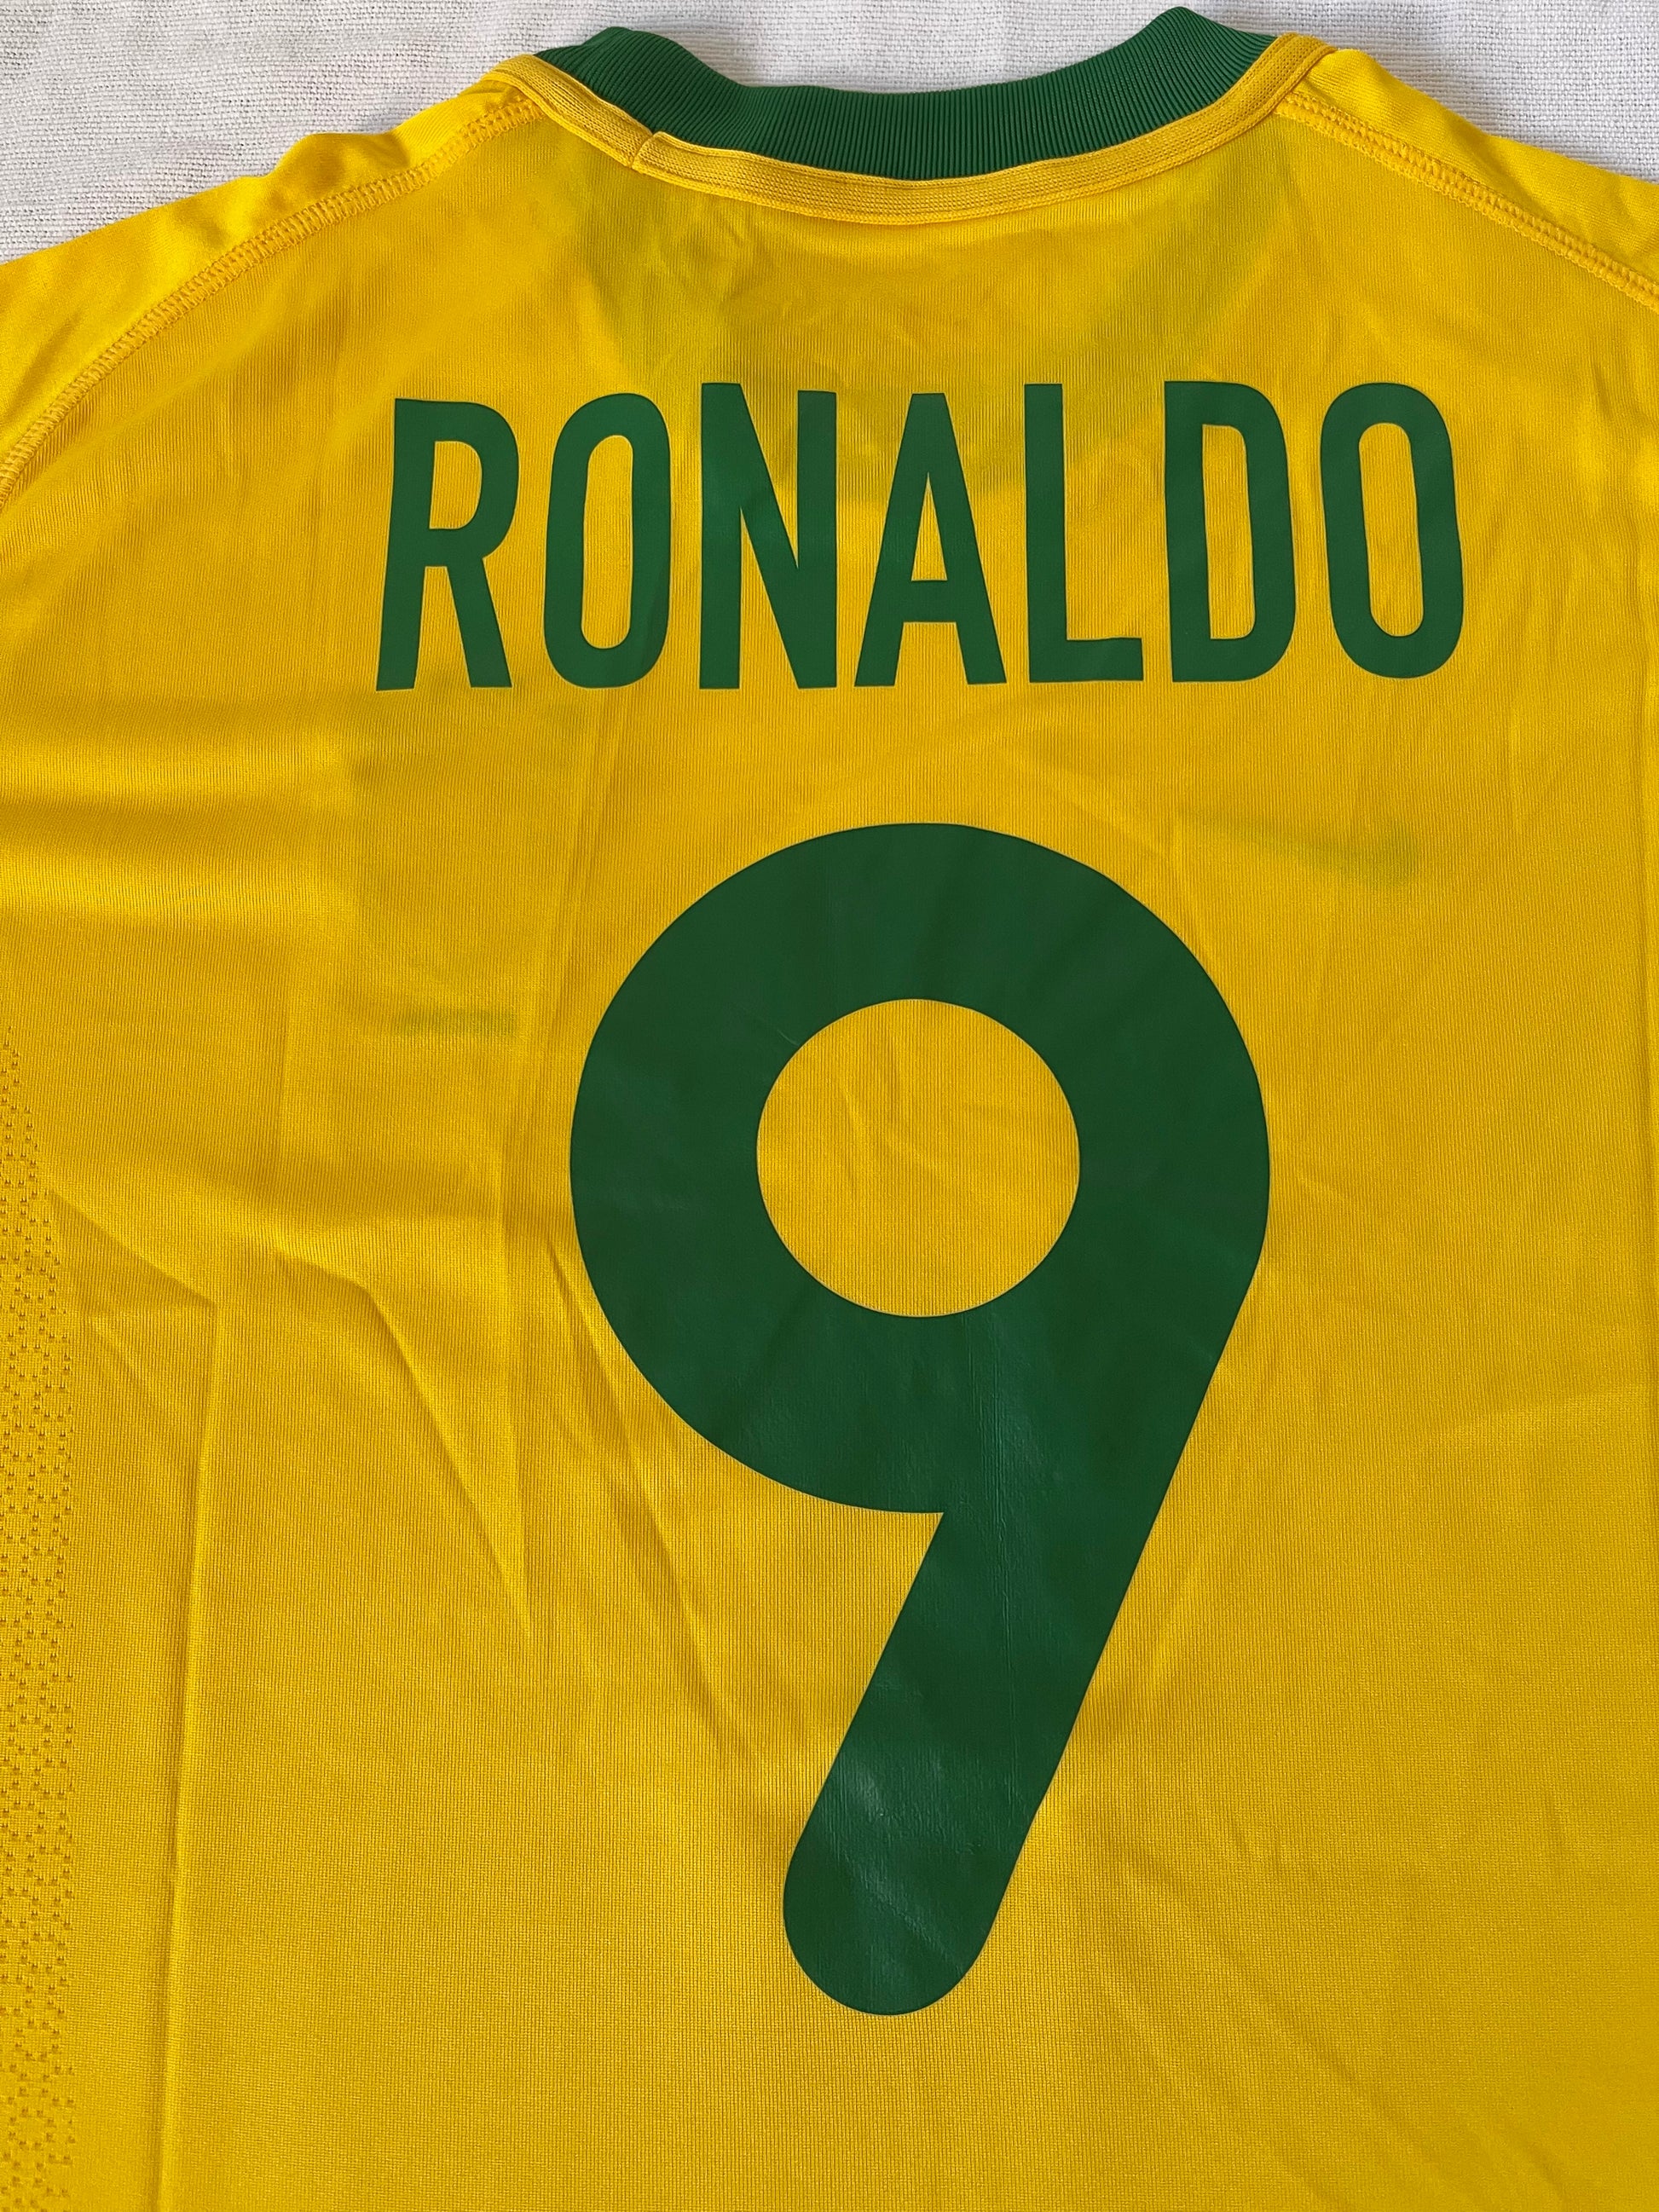 Authentic Ronaldo Brasil Brazil Nike No 9 2000-2001 Home Football Shirt Size L Dri-Fit Yellow BNWT New NOS OG DS